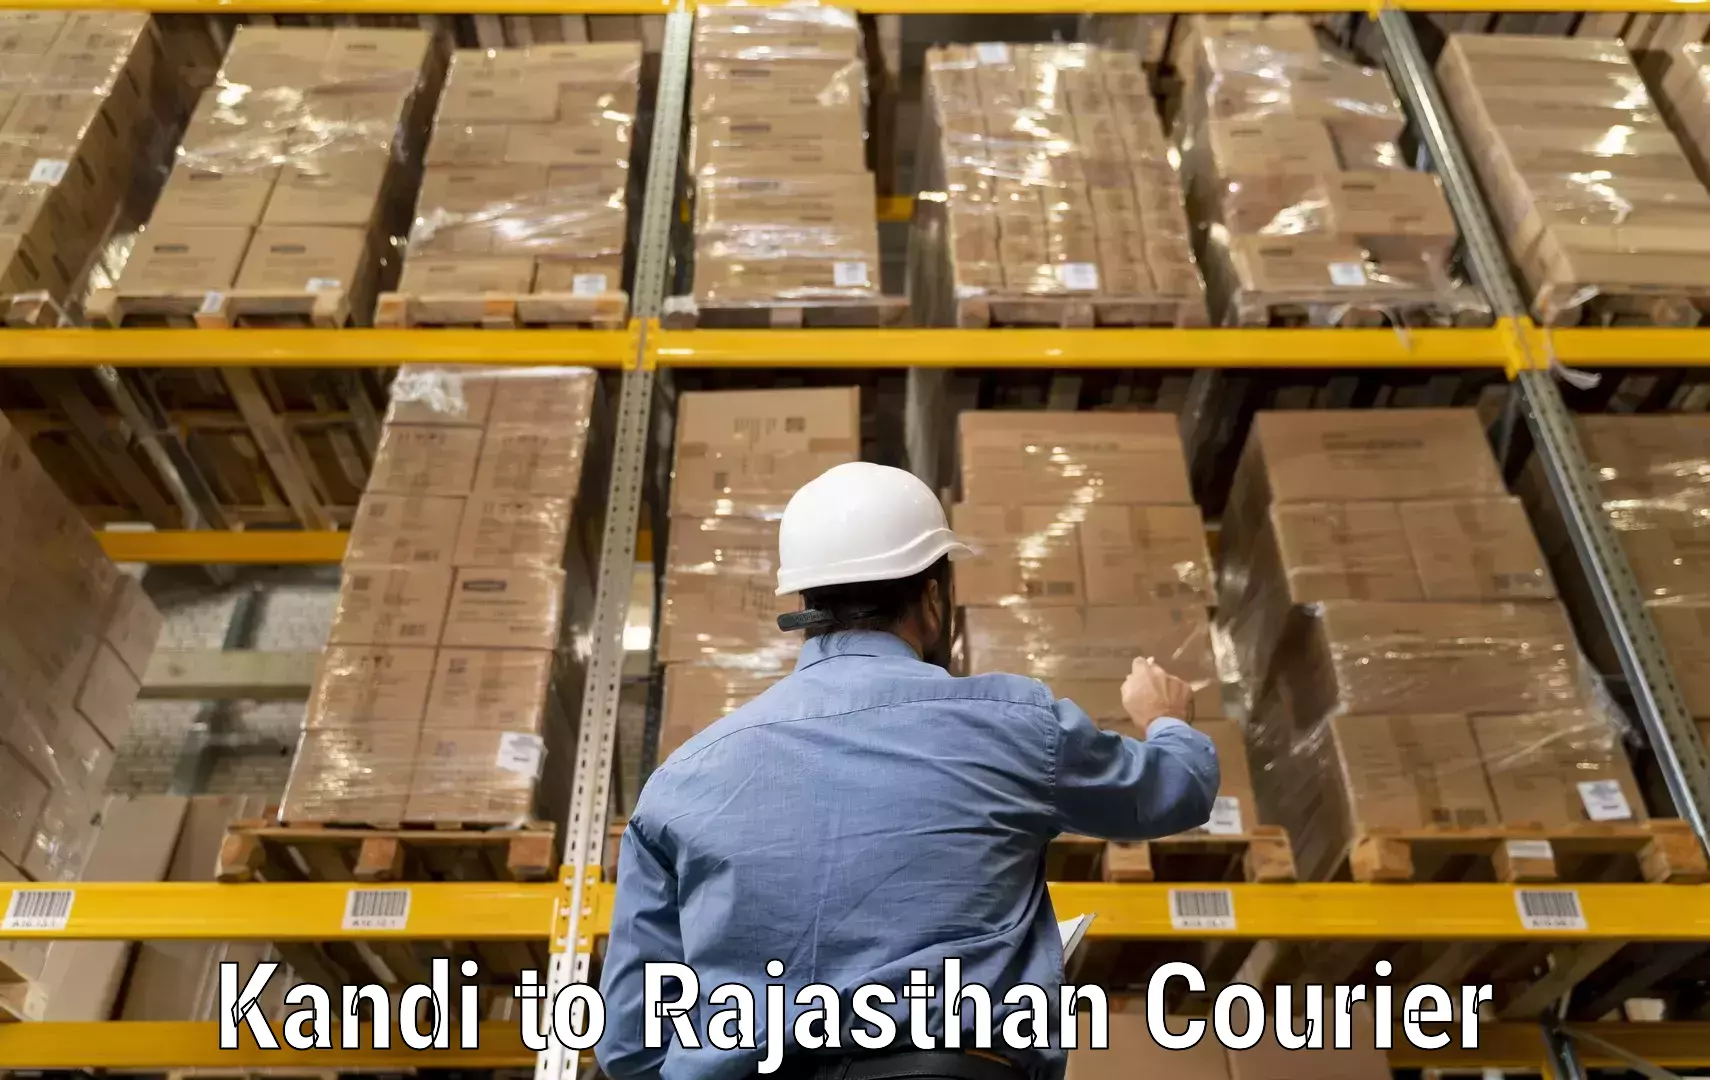 Seamless shipping experience Kandi to Jodhpur